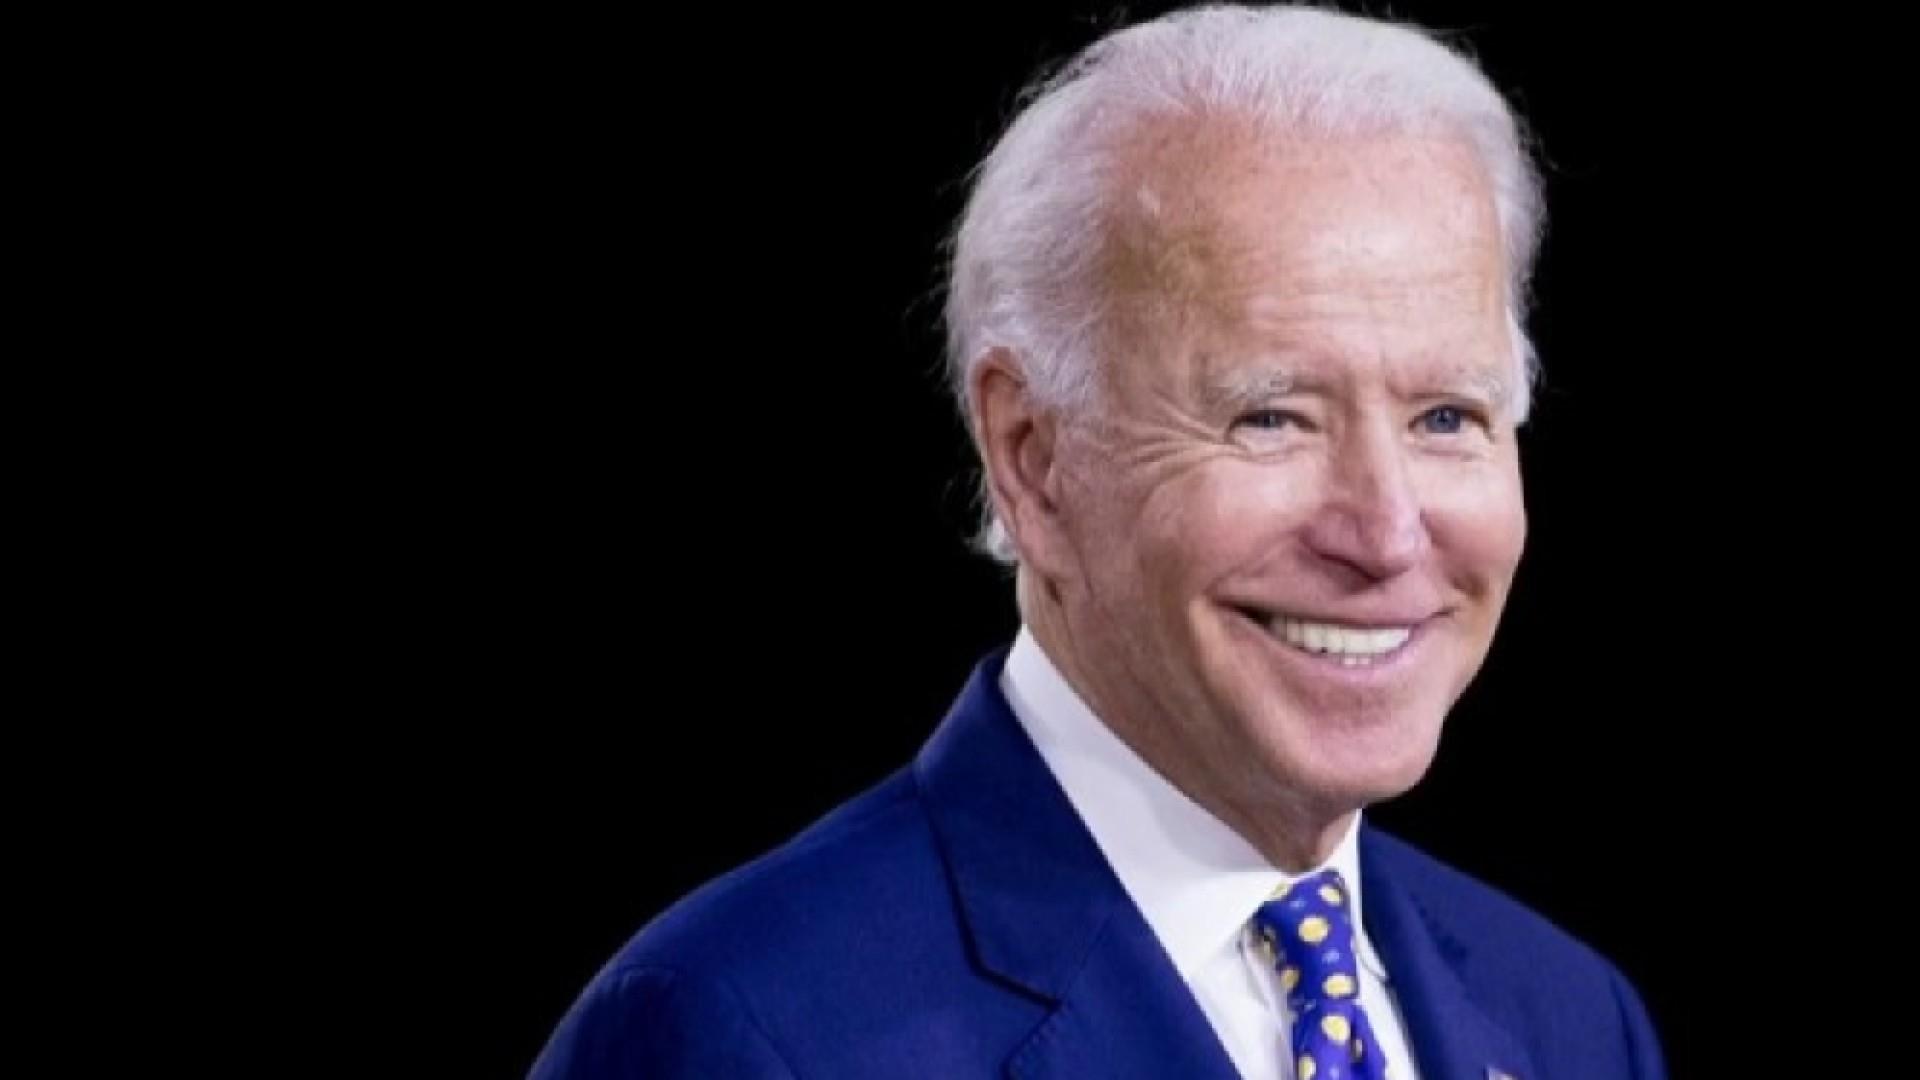 A photo of President-elect Joe Biden, smiling